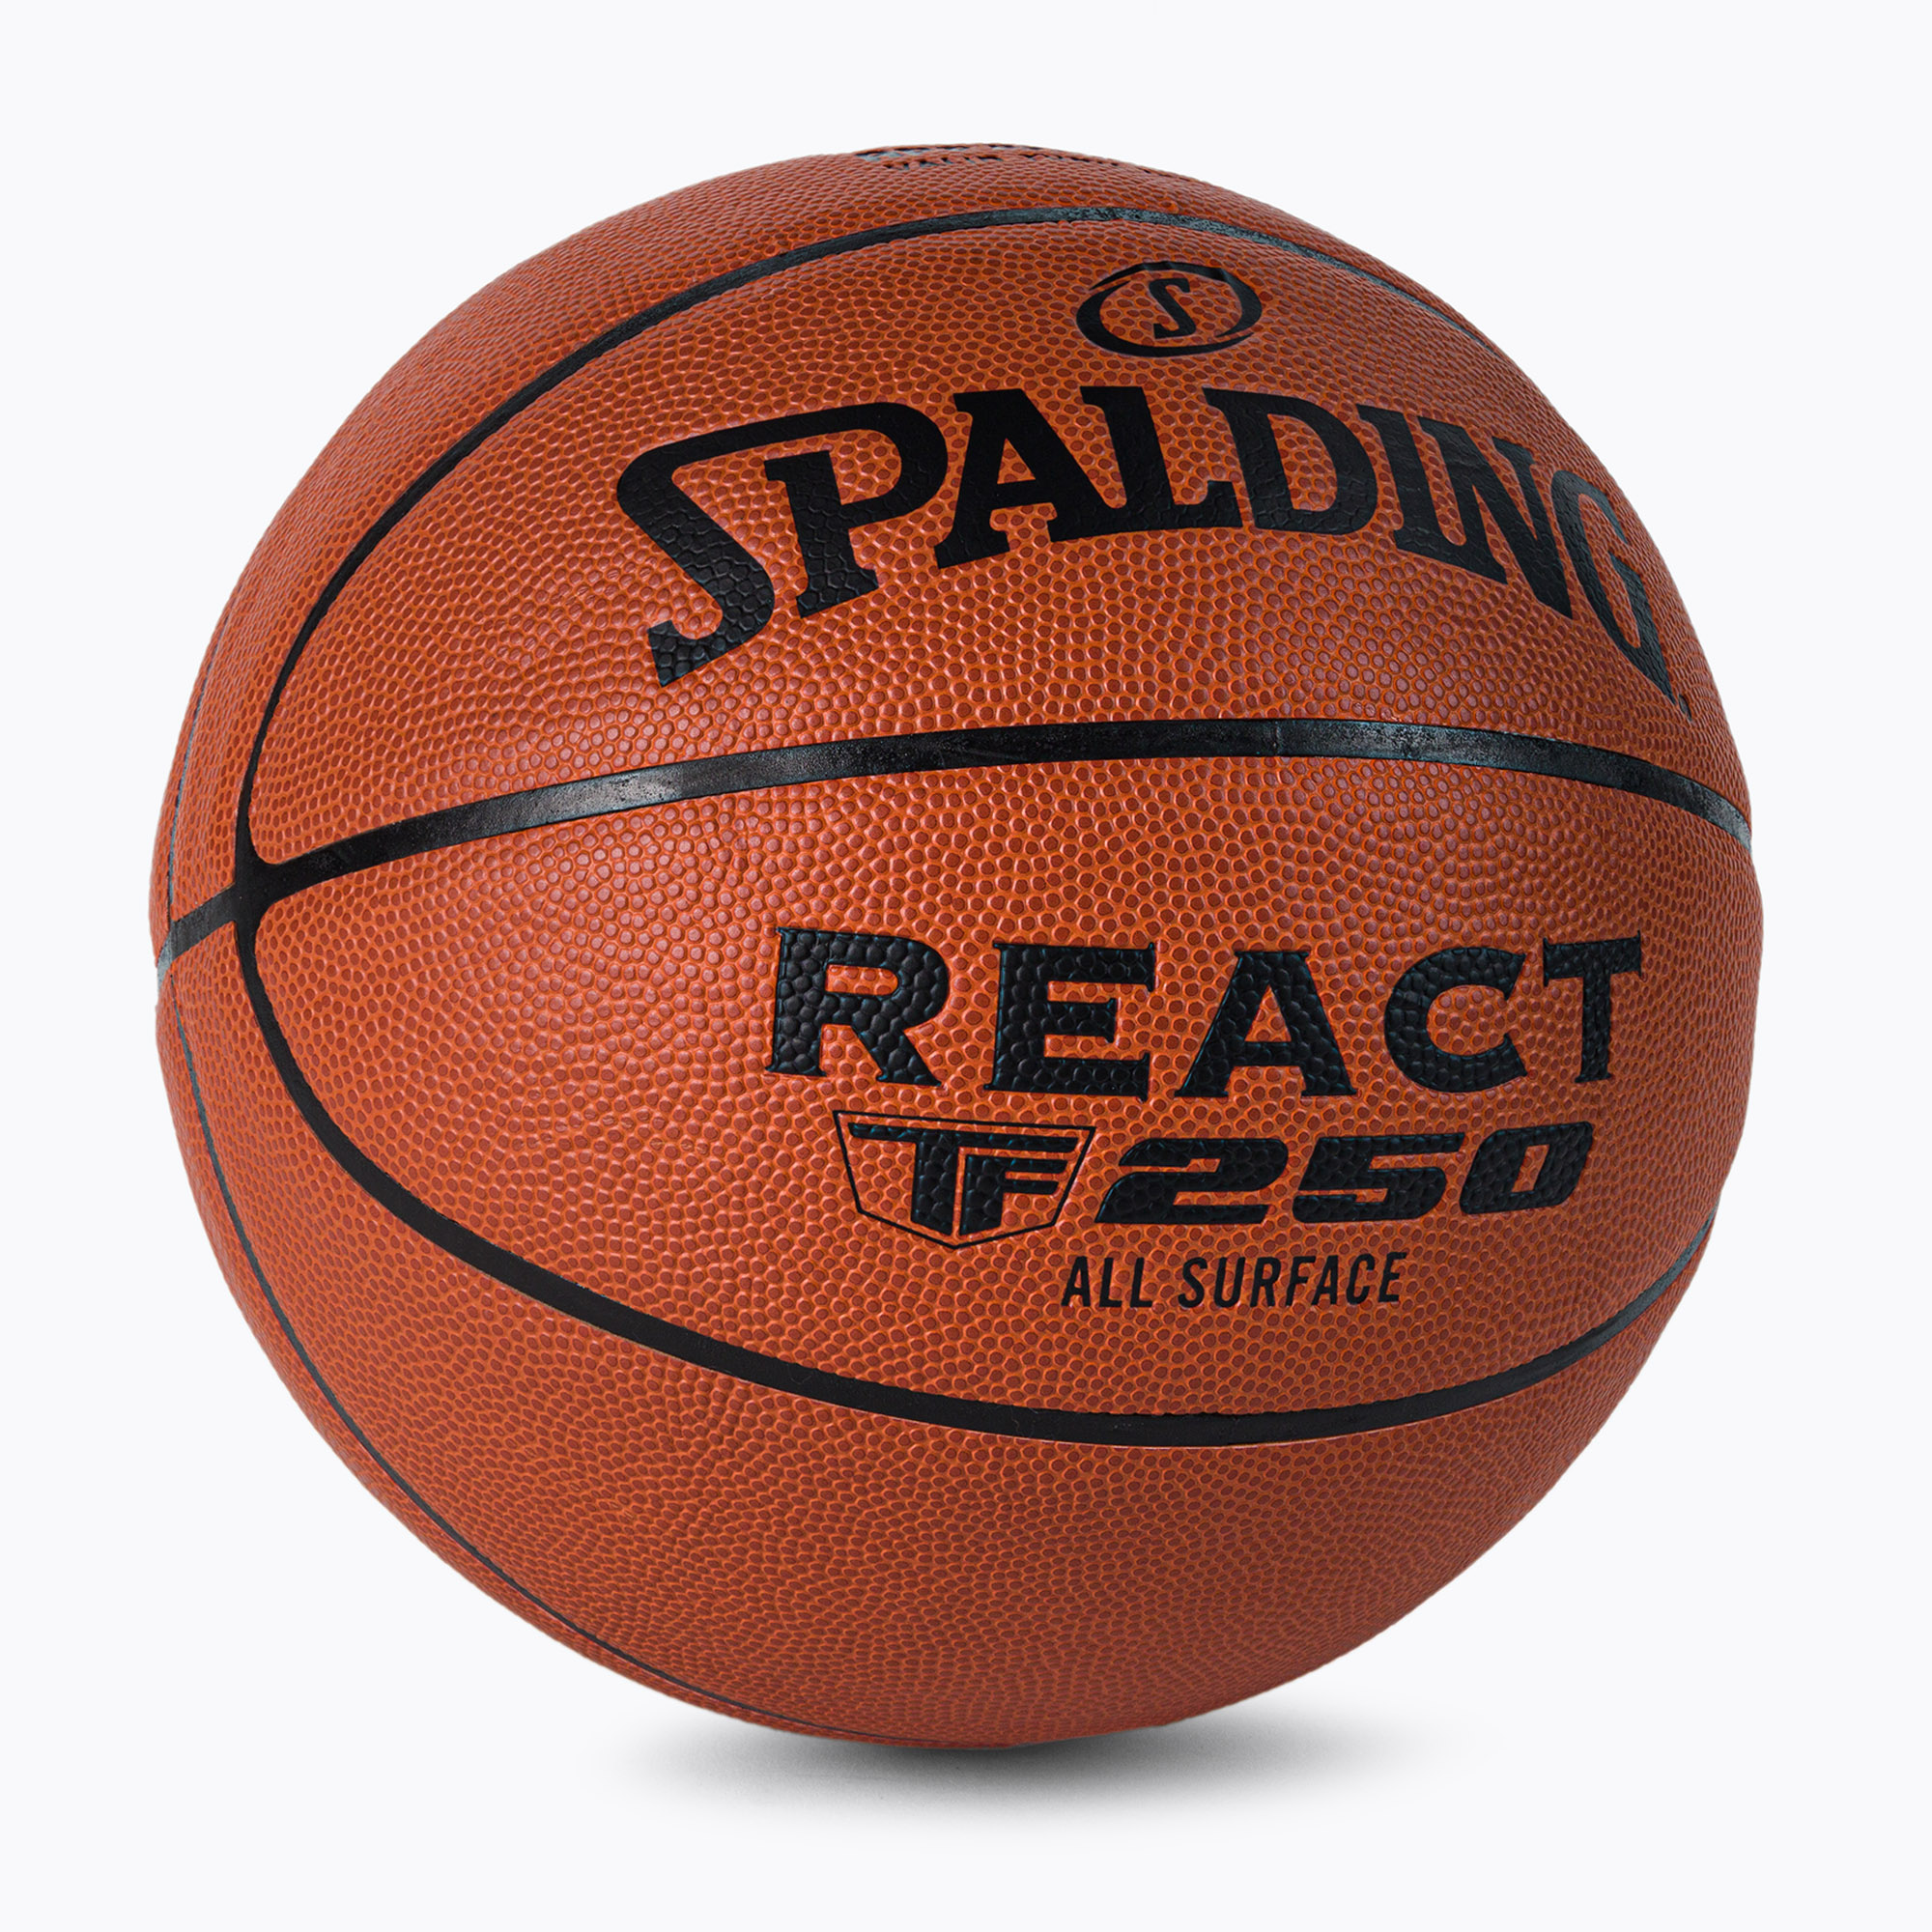 Spalding TF-250 React Logo FIBA баскетбол оранжев 76967Z